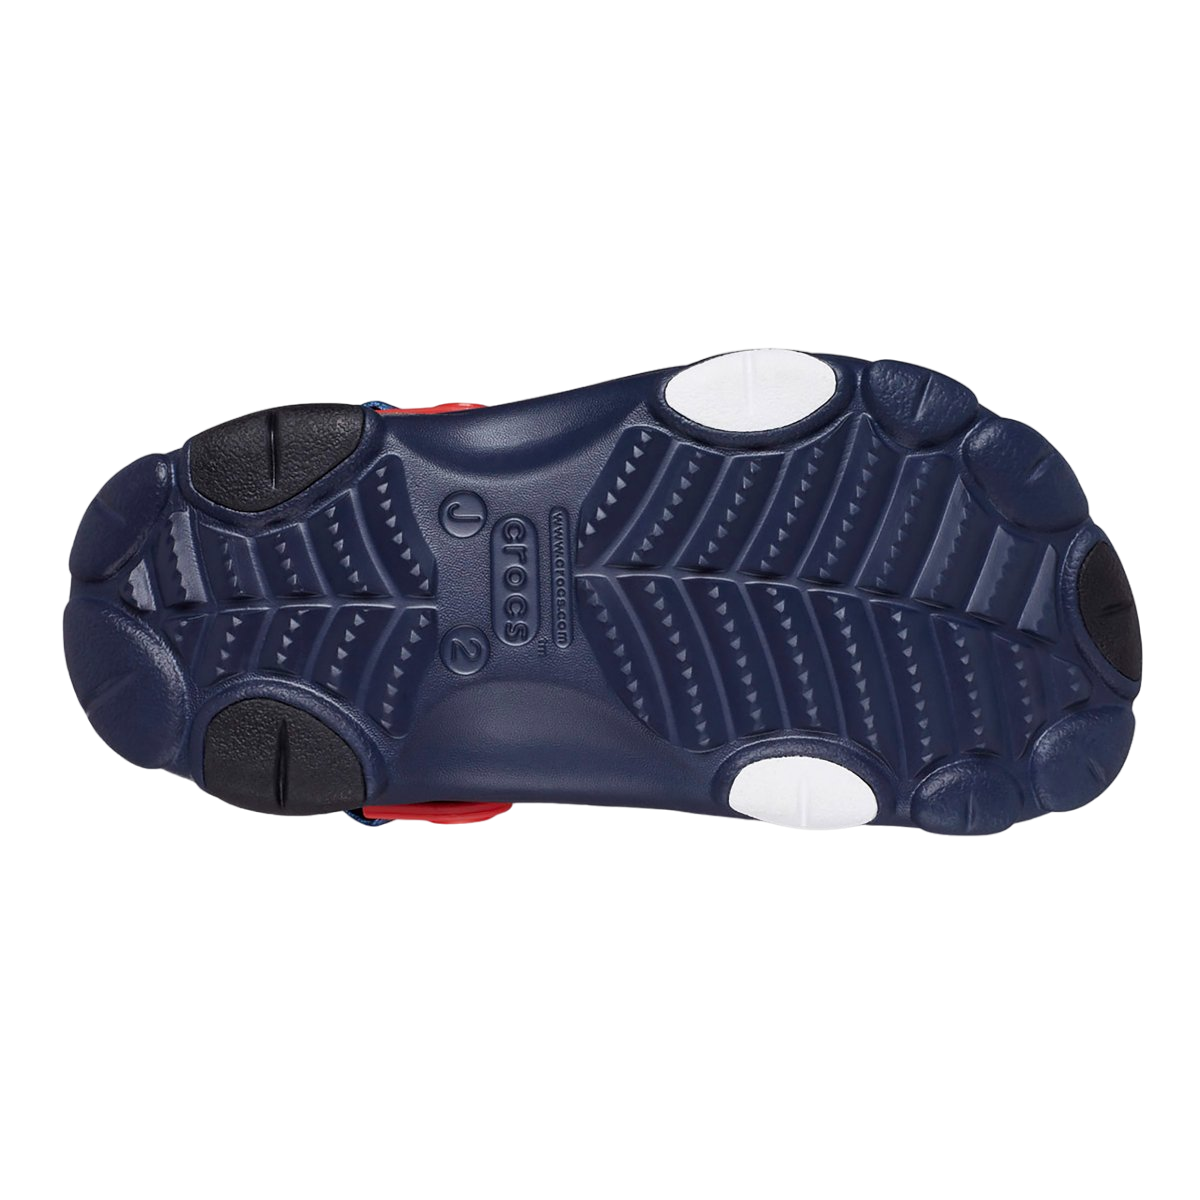 Crocs boys&#39; sabot slipper Team Spider Man All-Terrain Clog 208786-410 red-blue